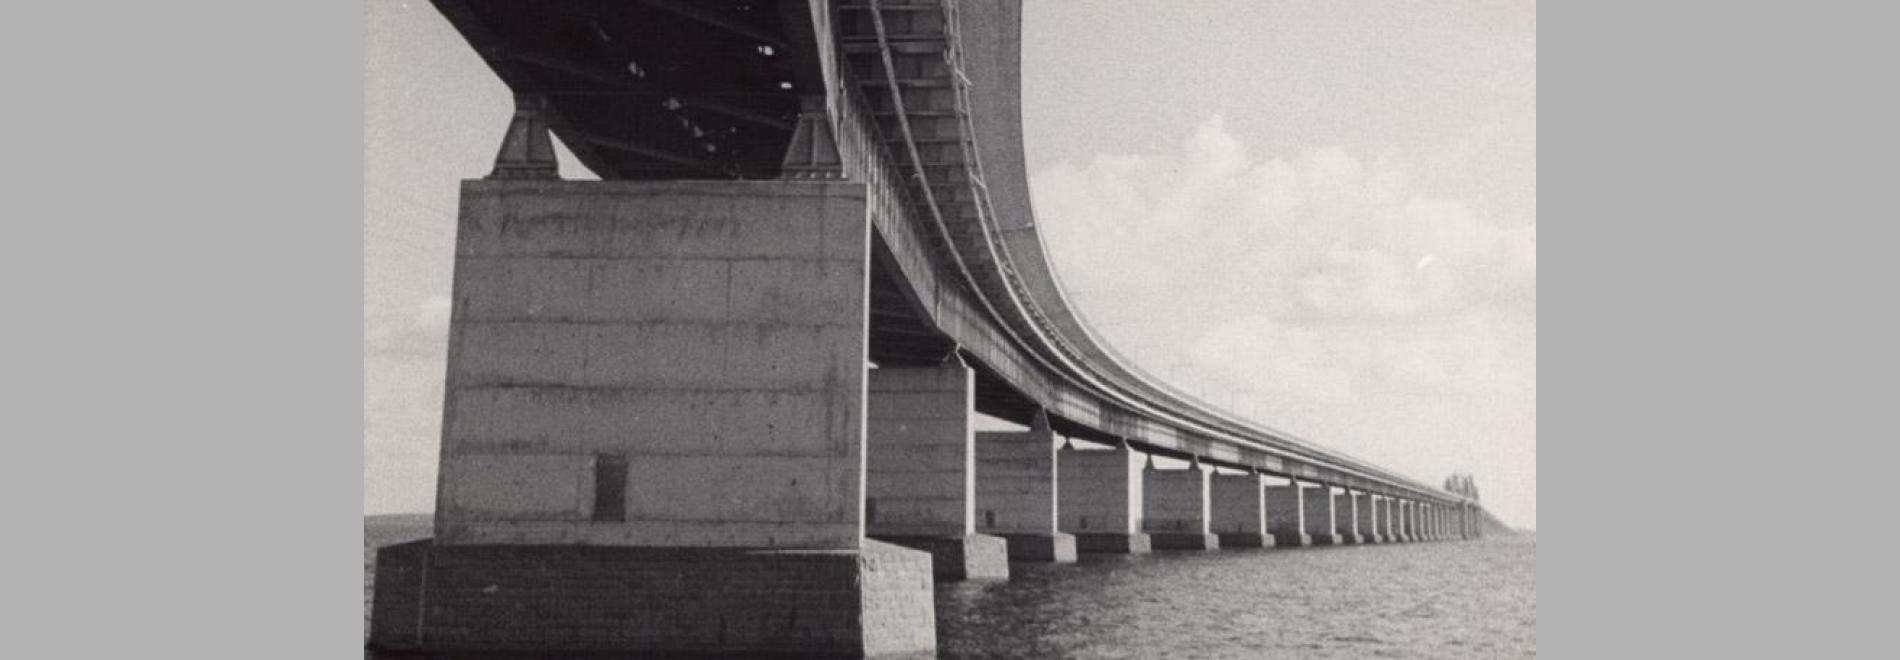 Storstromsbroen / El pont de Stormstrom (Carl Theodor Dreyer, 1950)